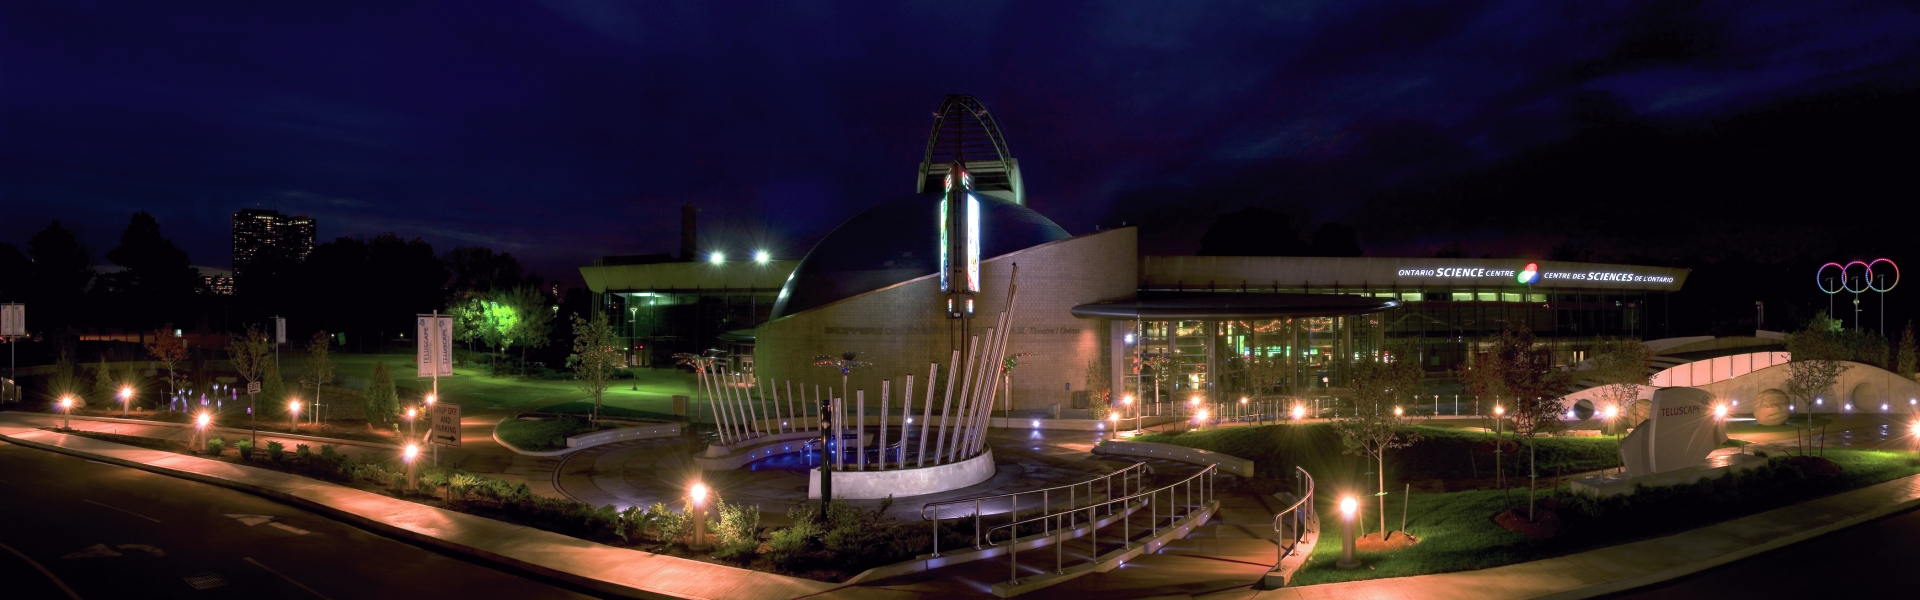 Ontario Science Centre at Night